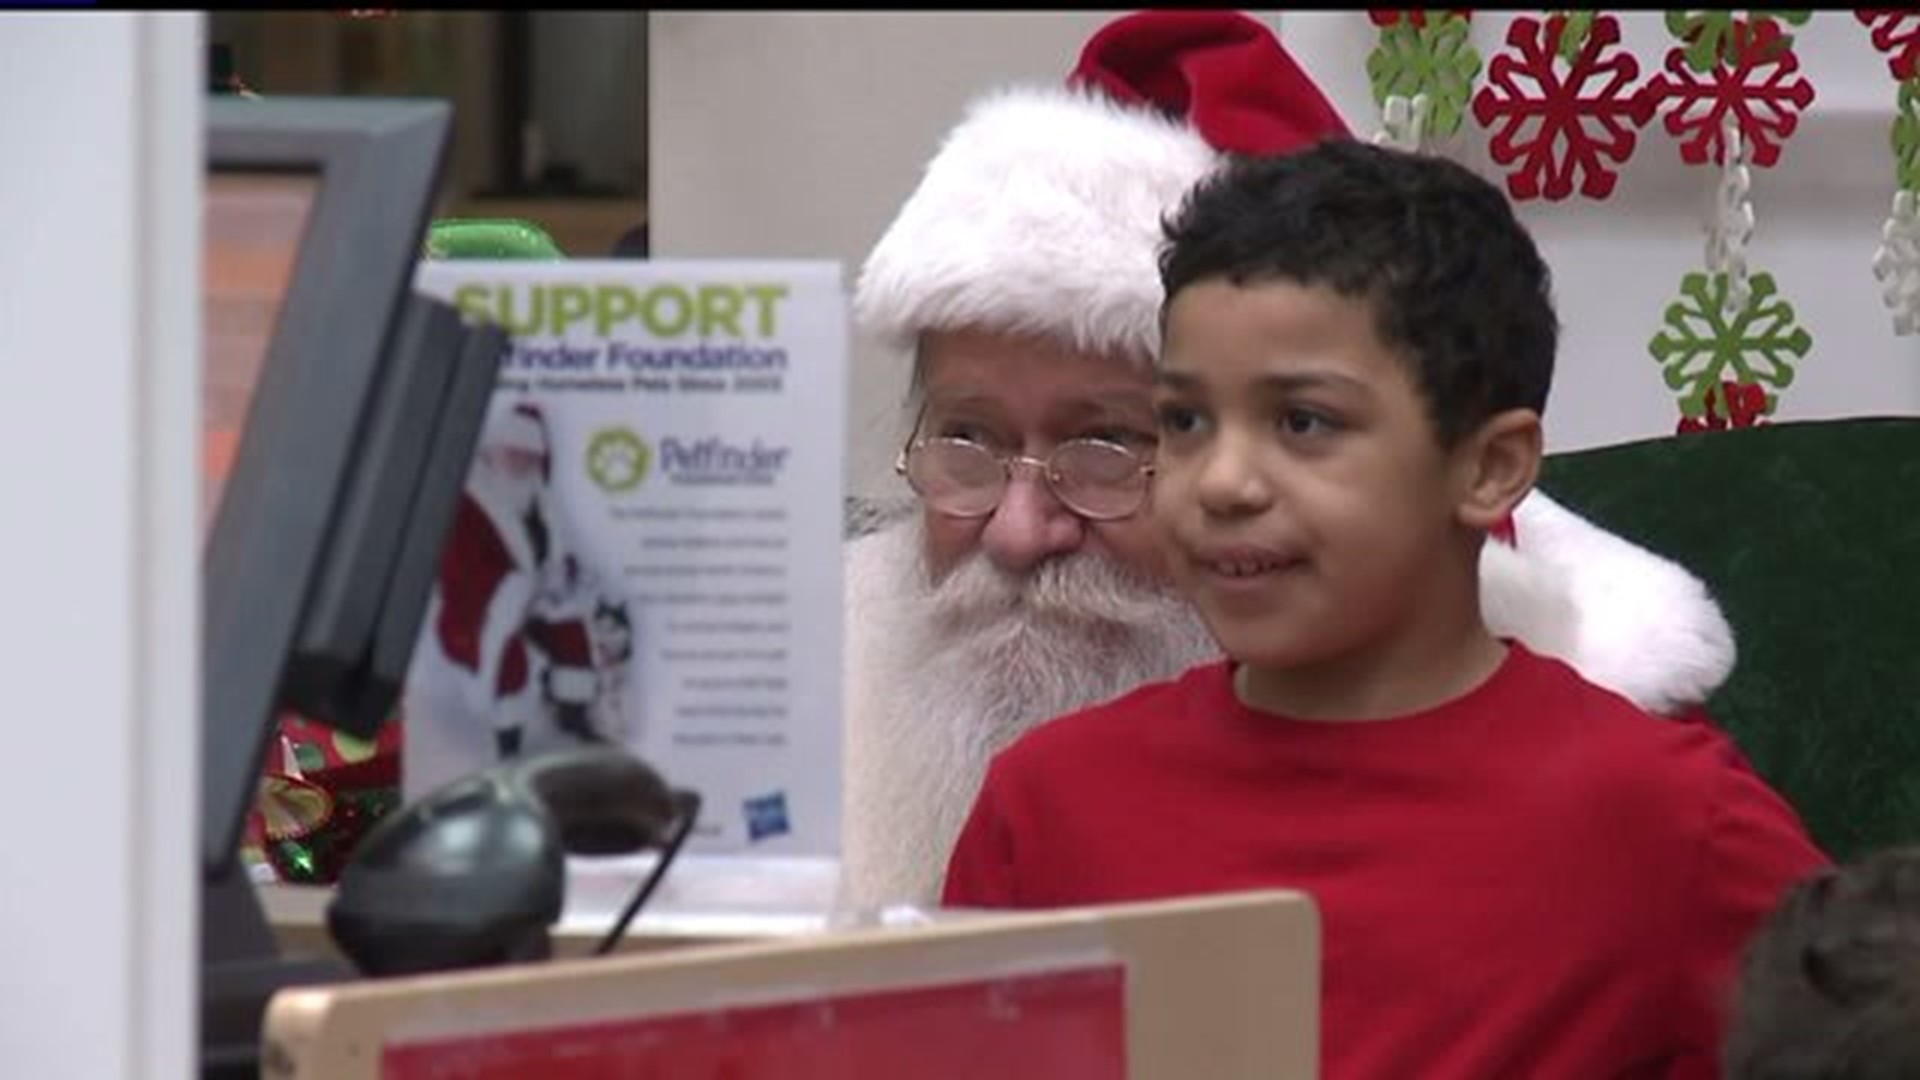 Special needs children visit with Santa